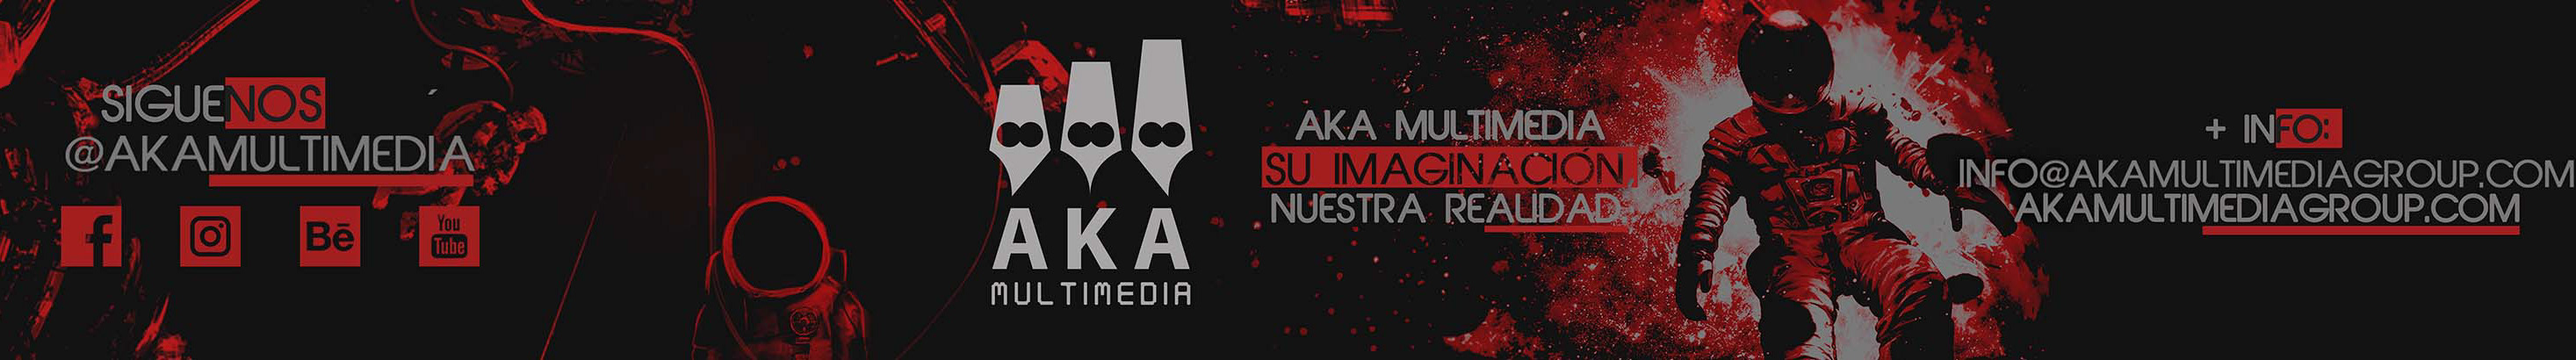 AKA Multimedia Group's profile banner